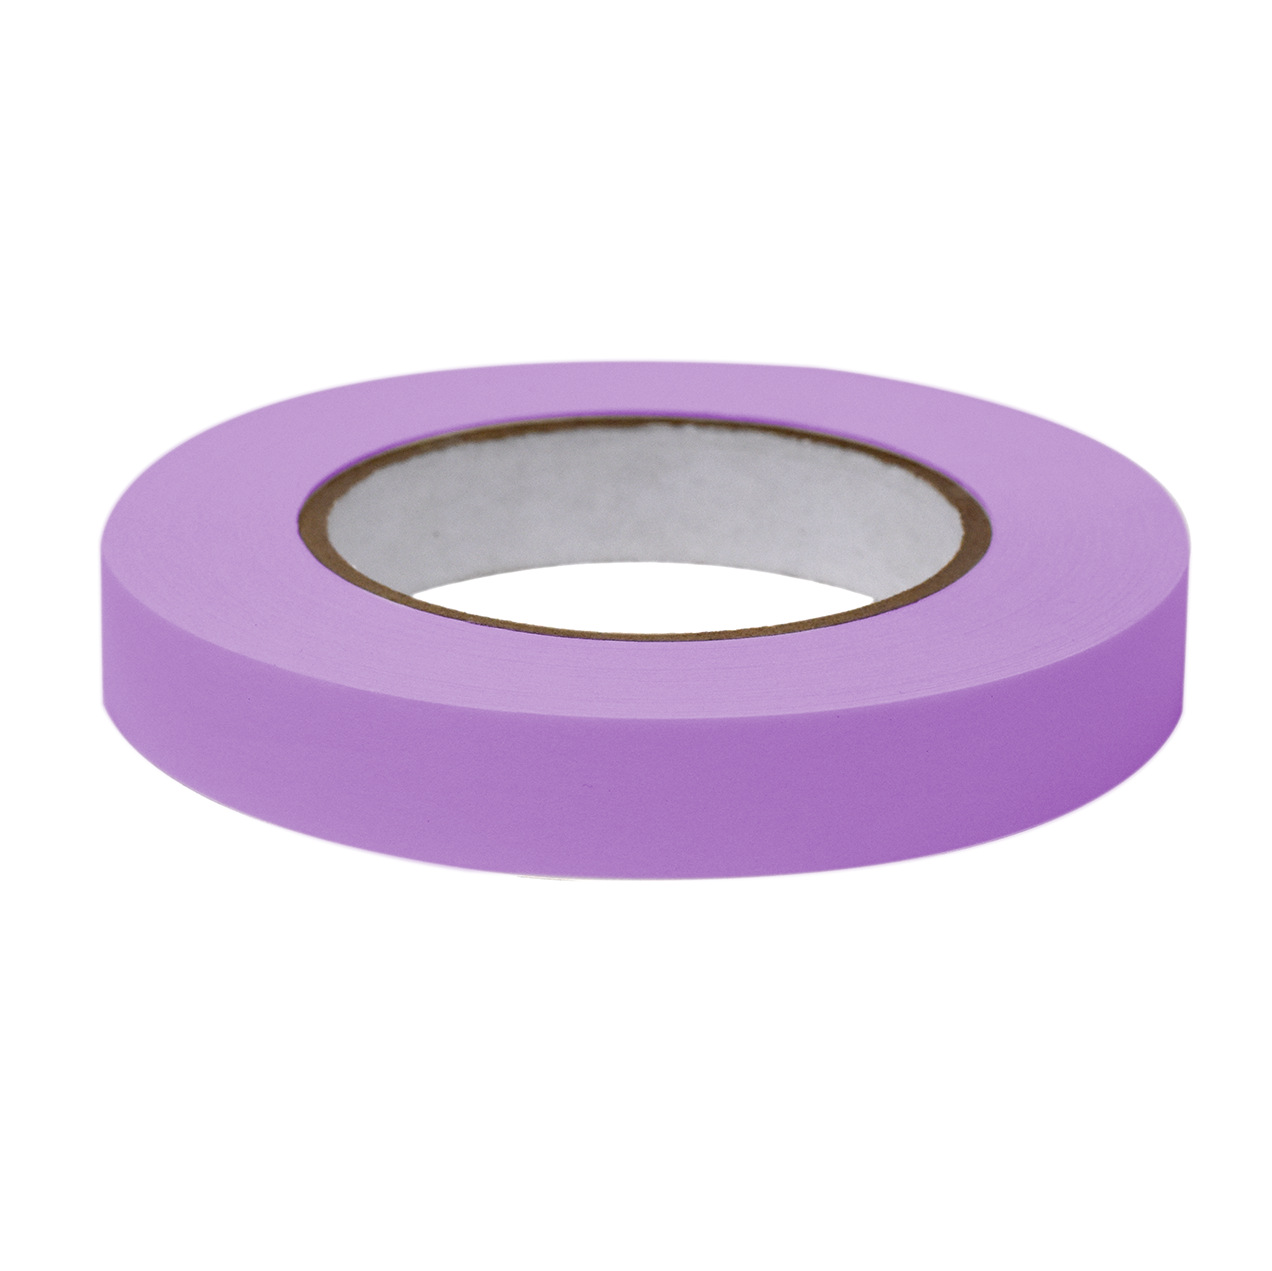 Globe Scientific Labeling Tape, 3/4" x 60yd per Roll, 4 Rolls/Case, Violet  